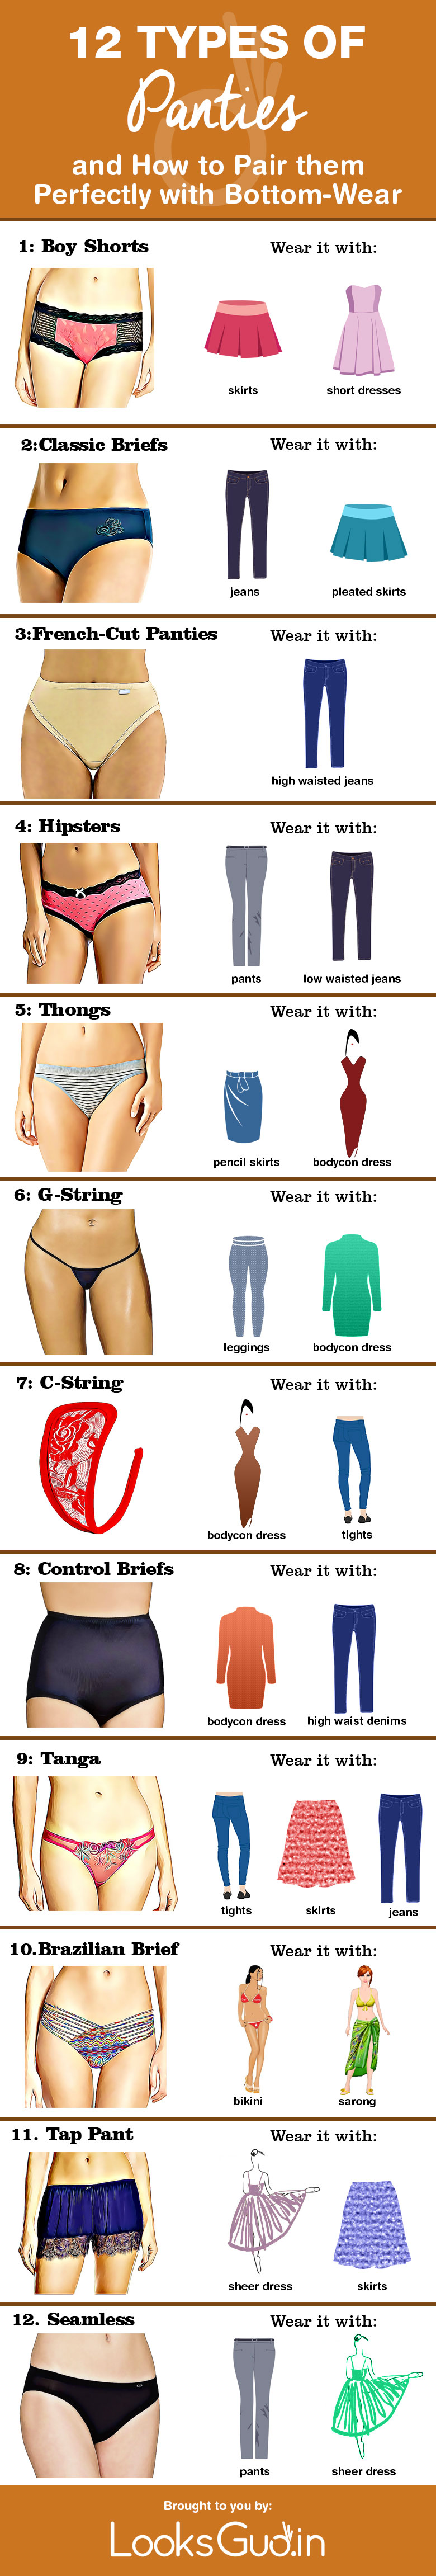 Panty Styles: Guide to Women's Underwear Types